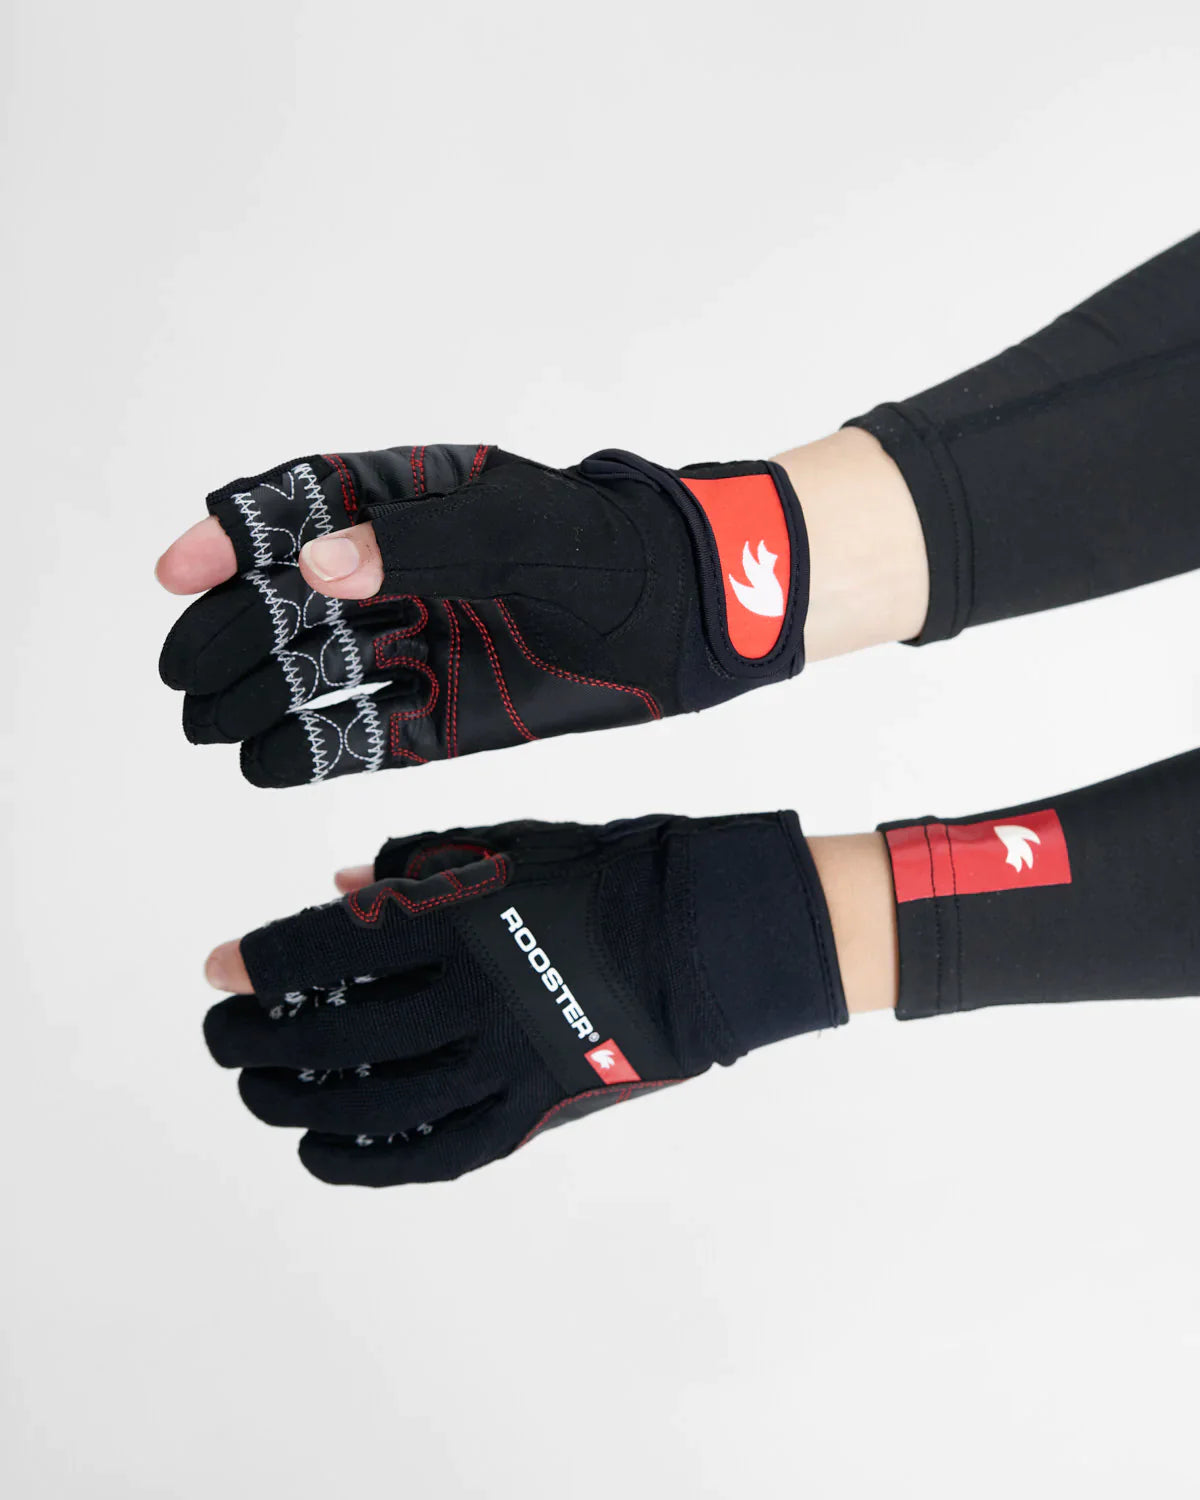 Segelhandschuhe Pro Race 2 Glove (2 Finger offen)